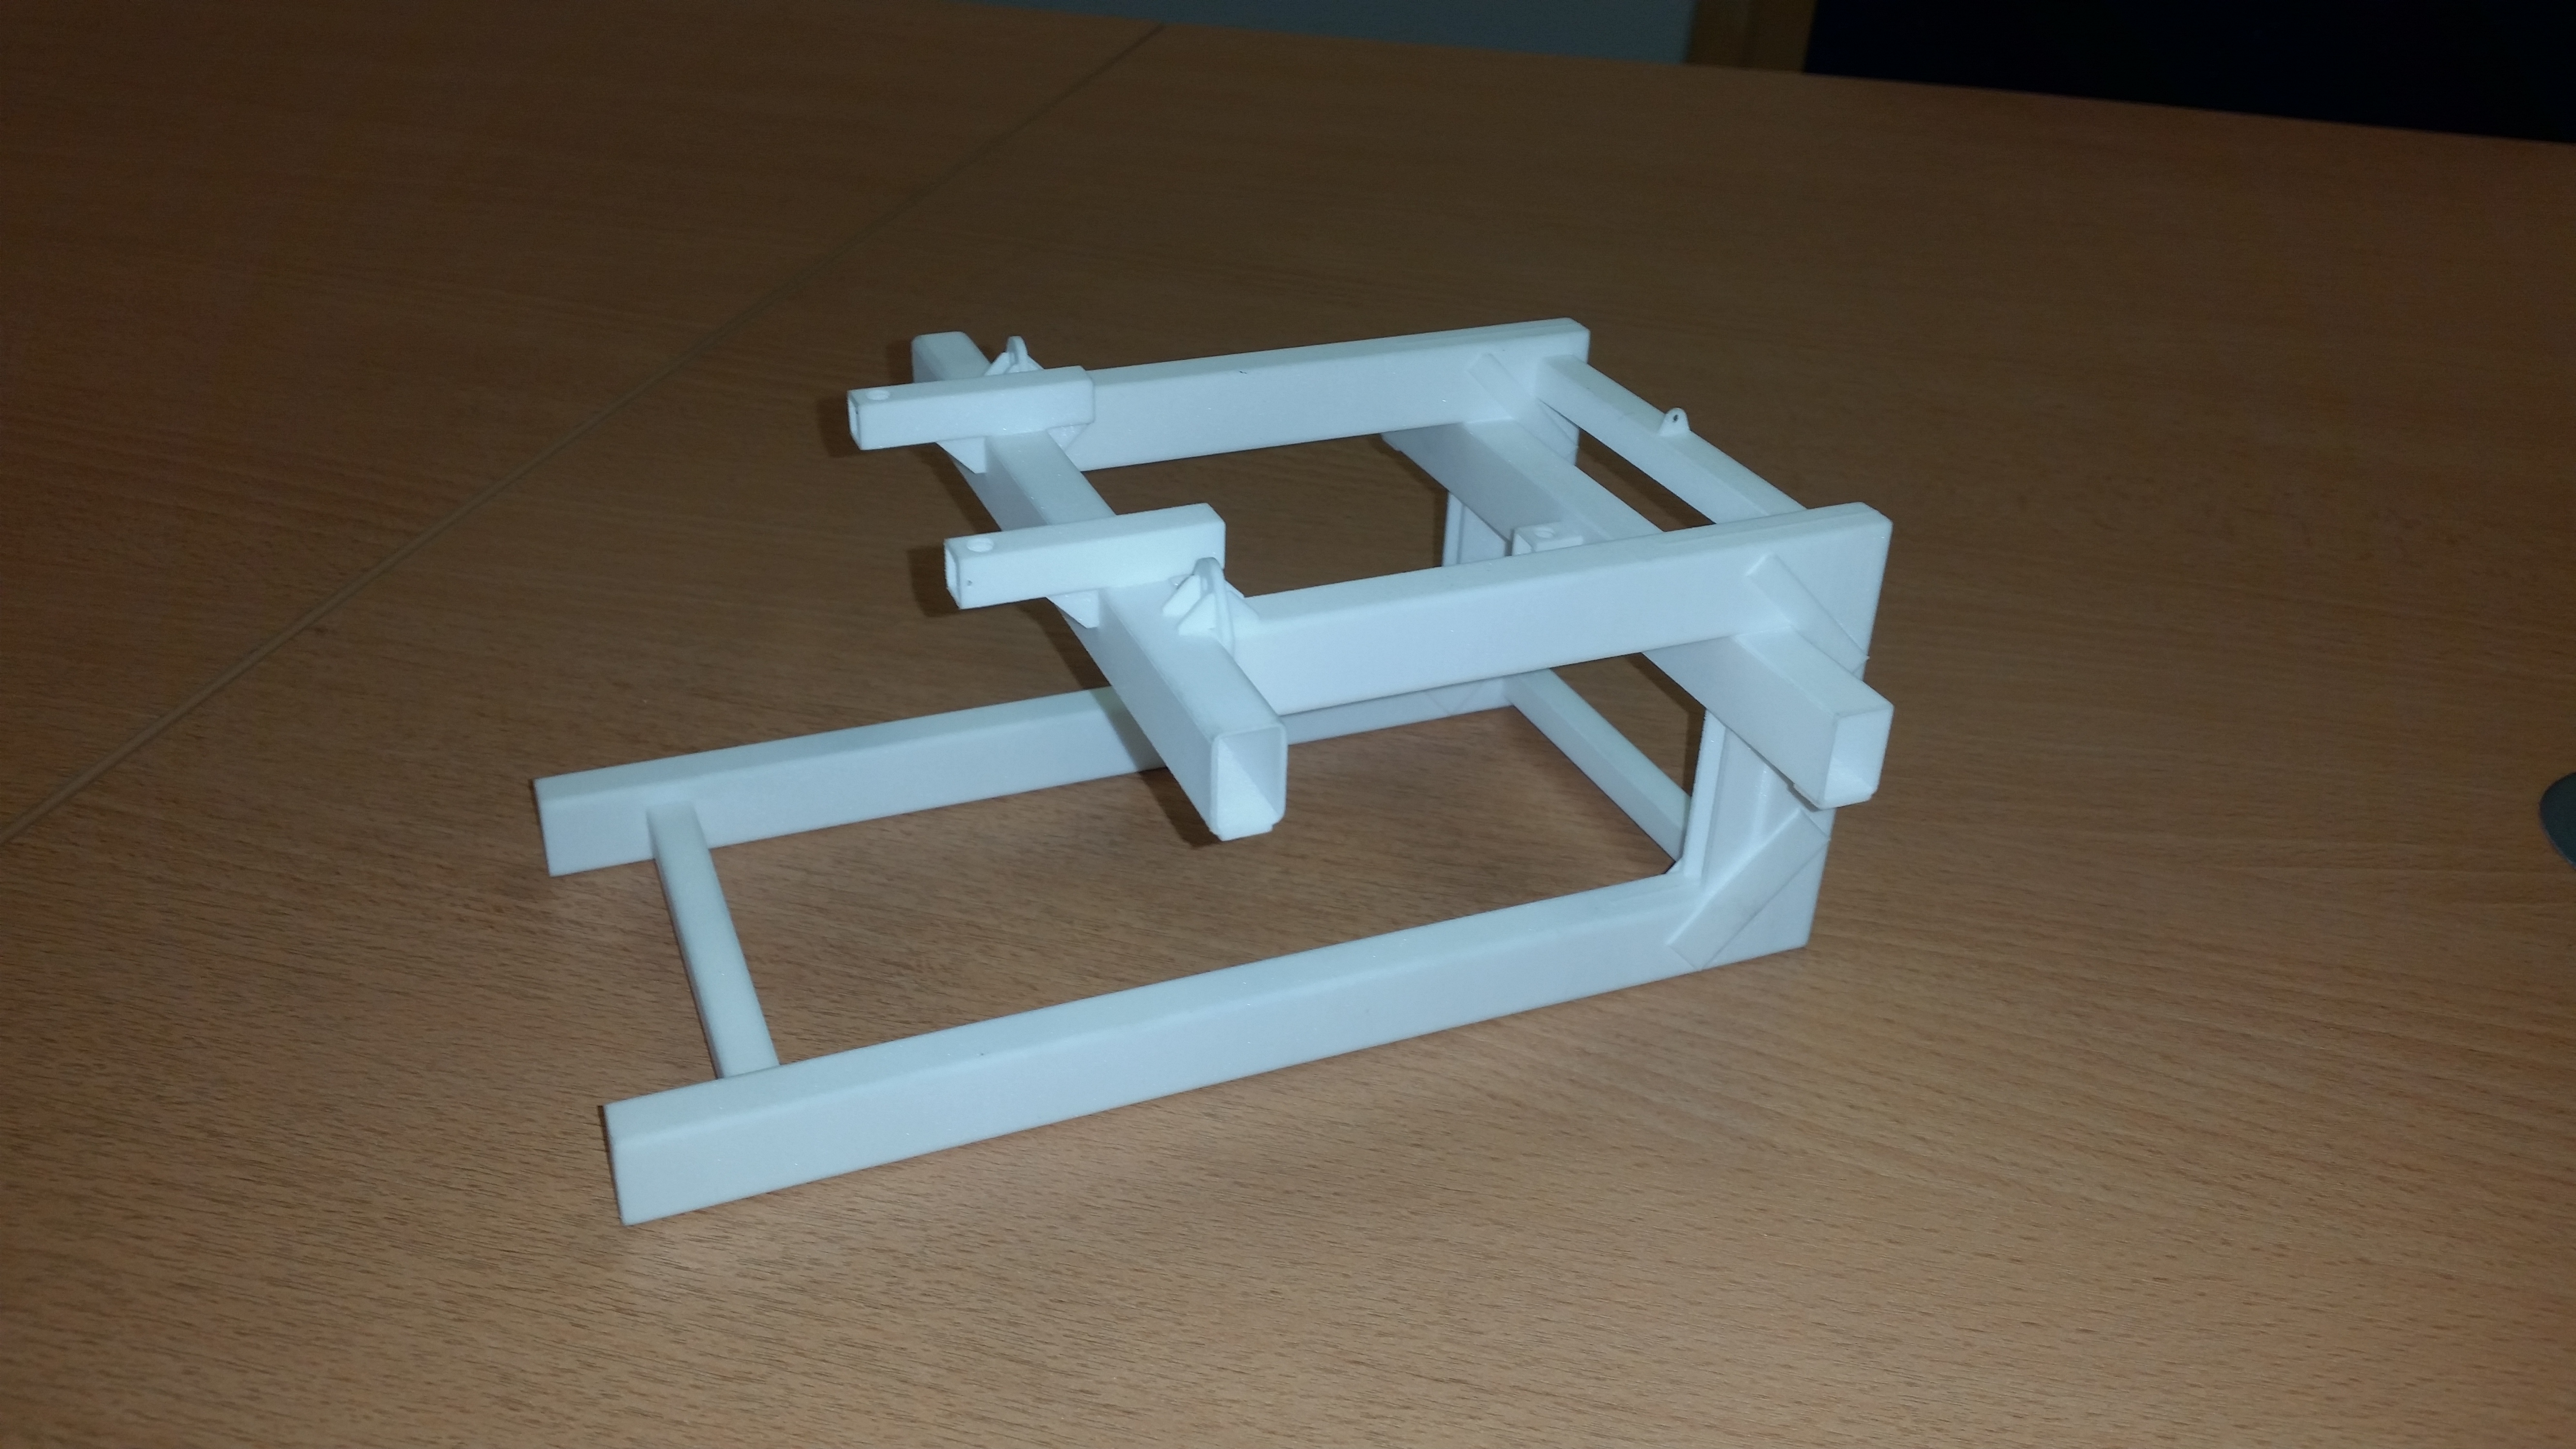 Lift beam design 3D model